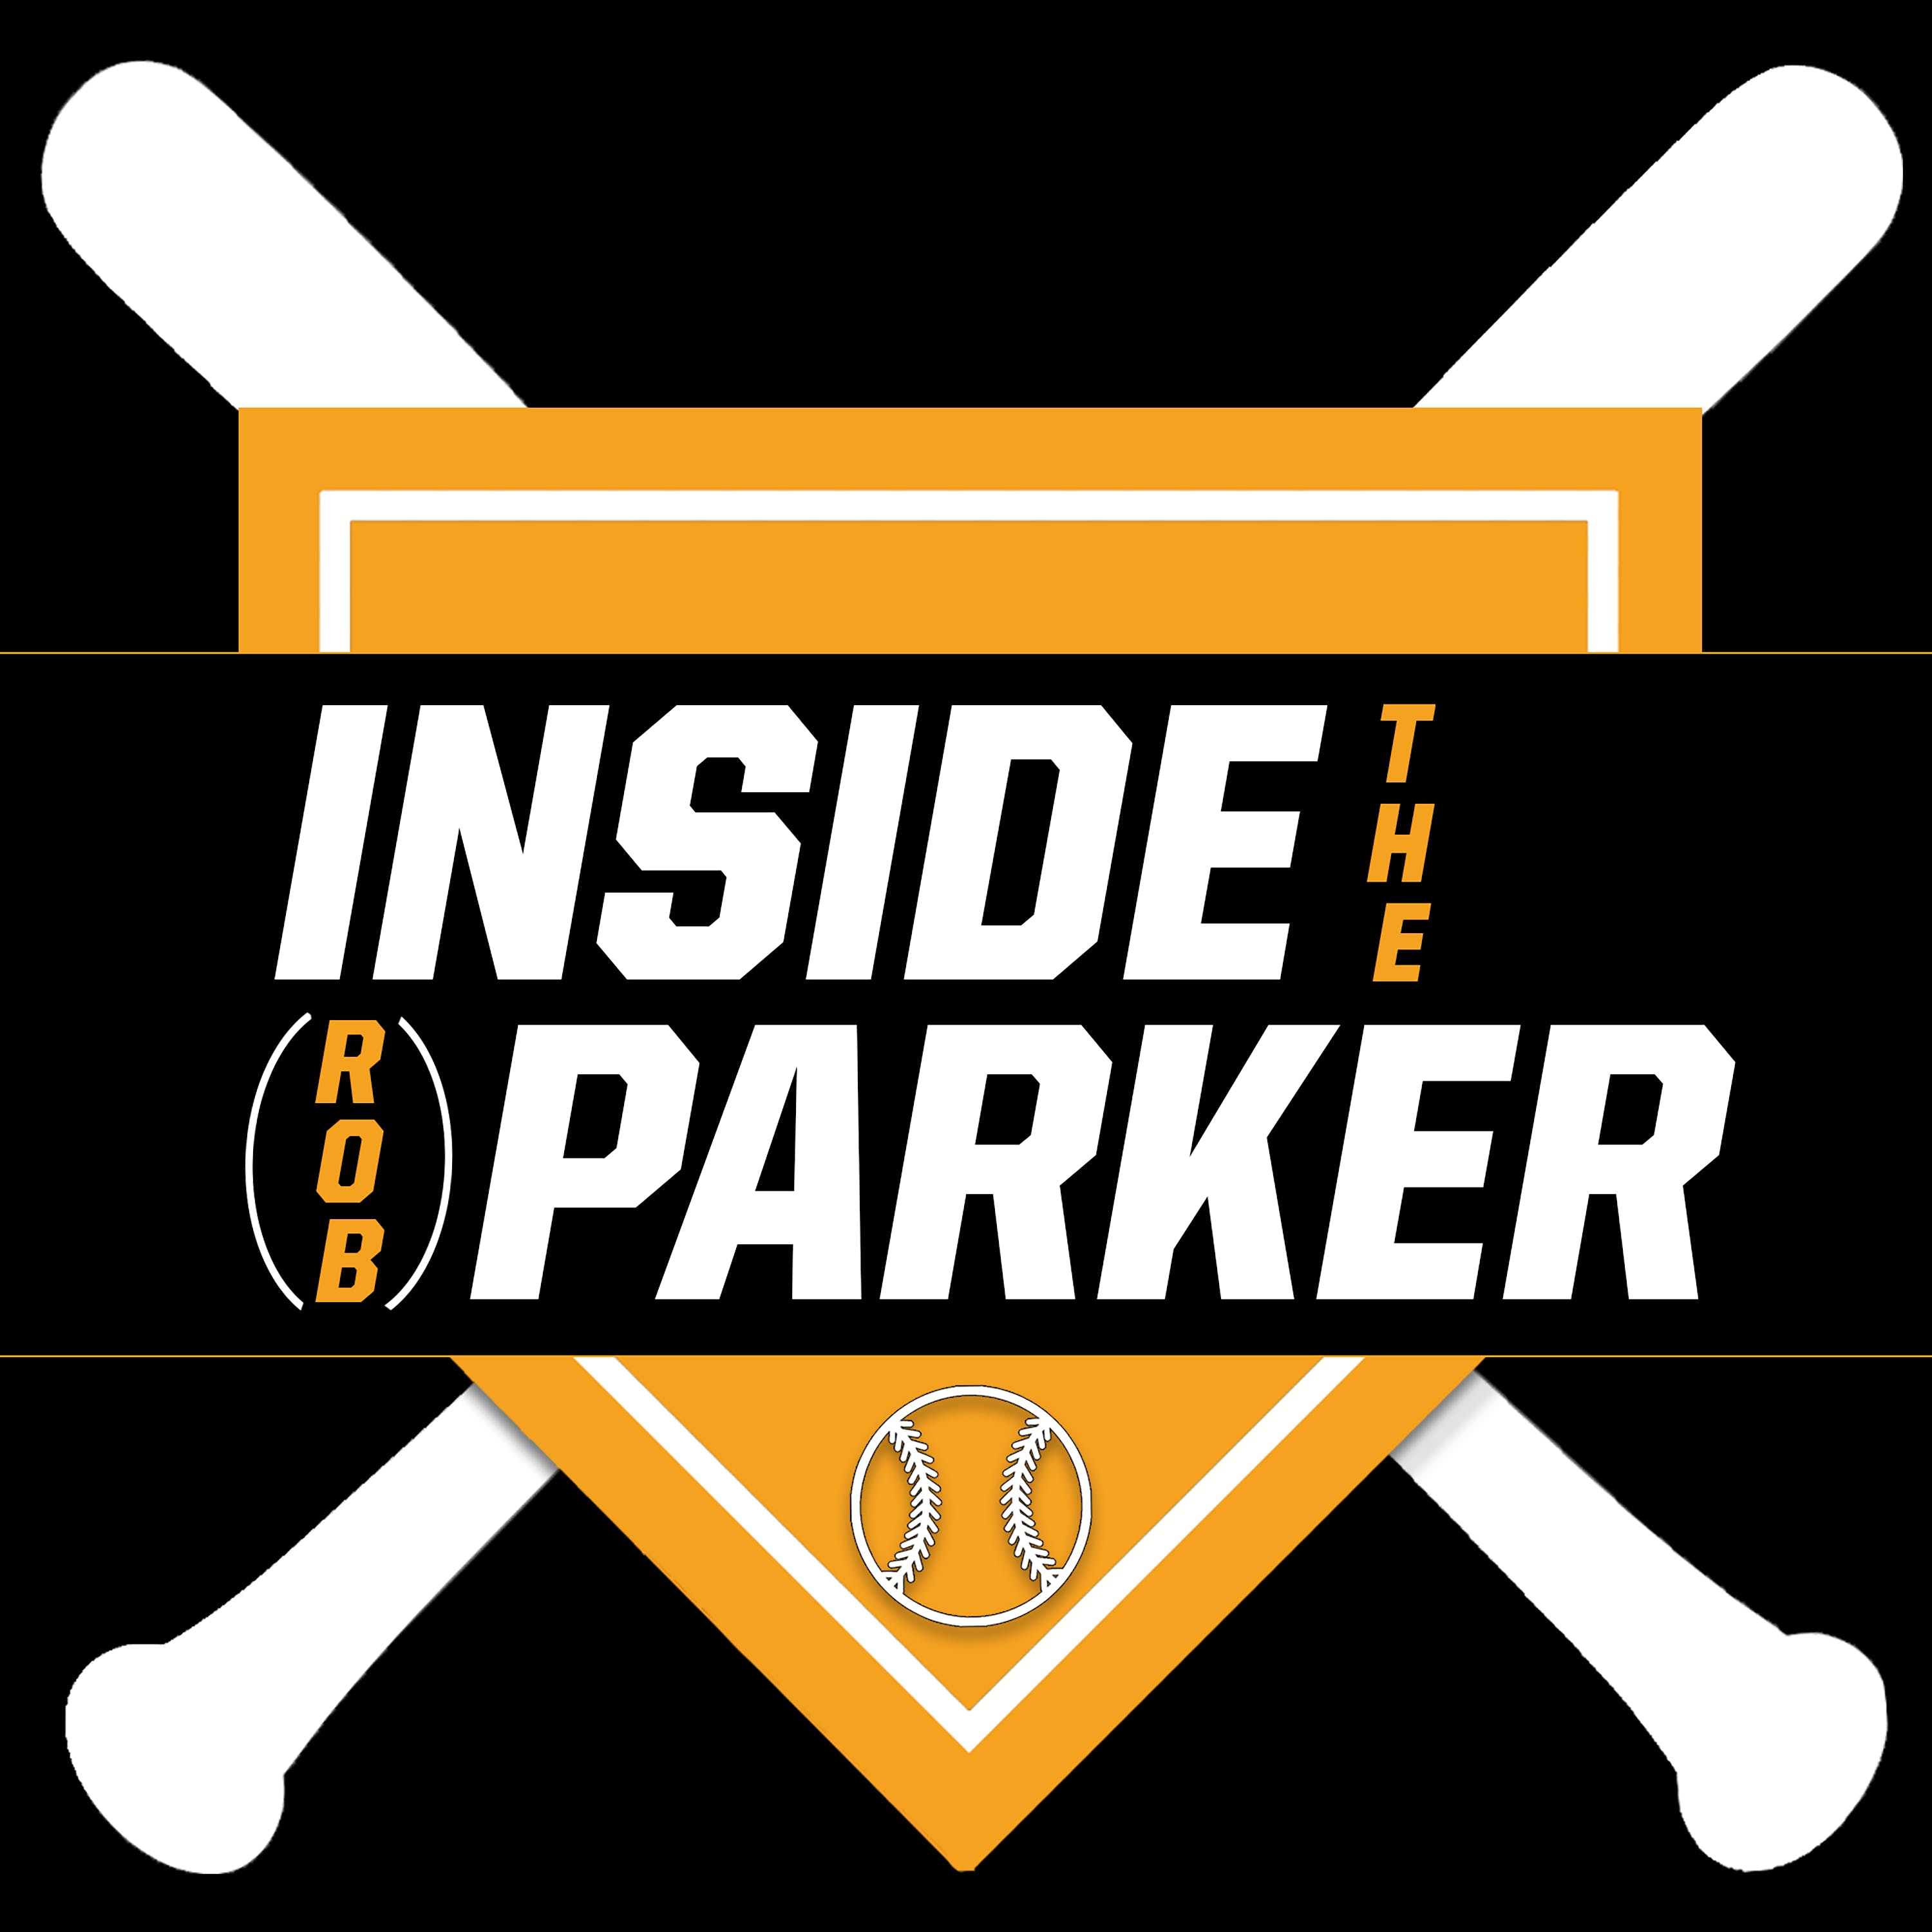 Inside the Parker: Ohtani Still Deserves the Bag, Dodgers' Pitching Woes + Hall of Fame pitcher Greg Maddux